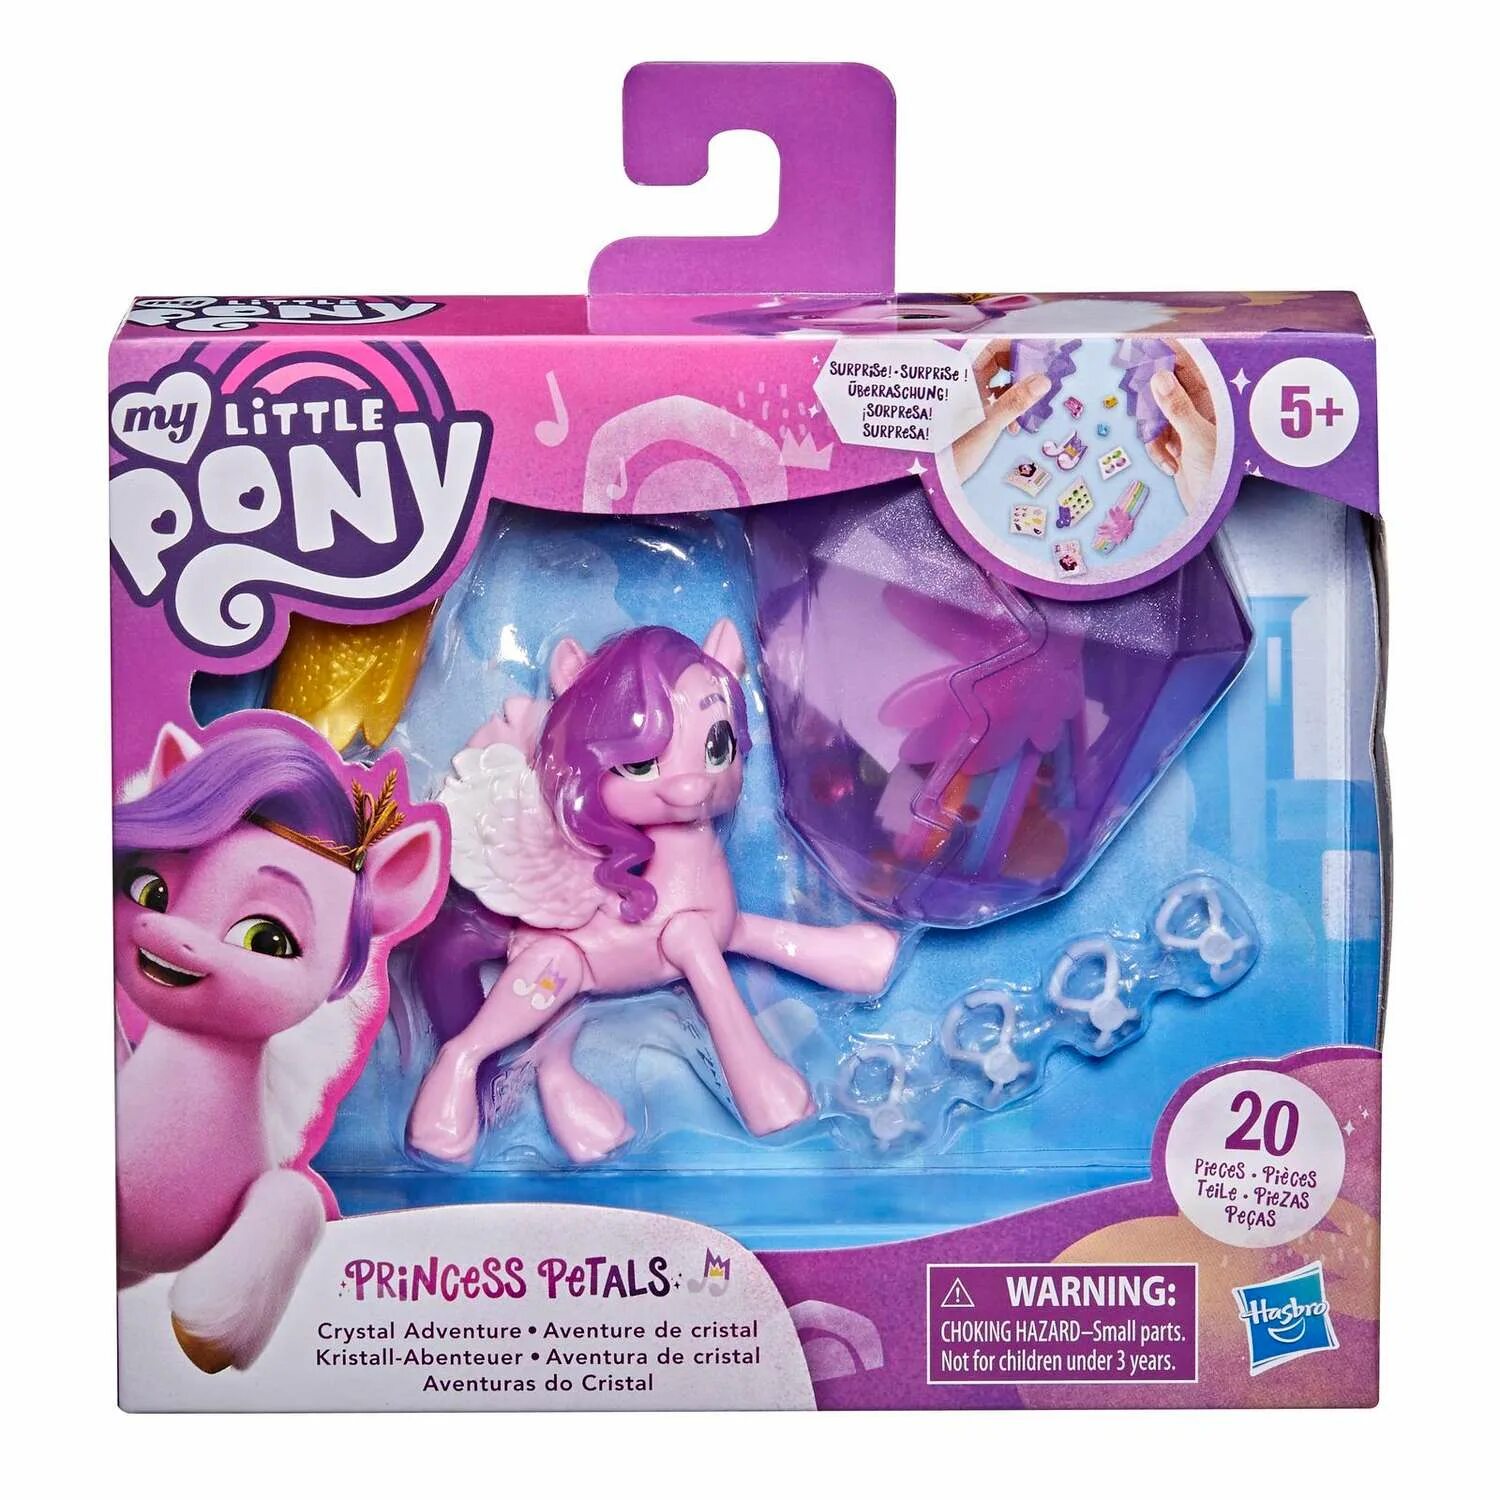 My little pony алмазы. Принцесса Петалс my little Pony. My little Pony g5 Pipp игрушки. Принцесс Петалс пони игрушка. Игровой набор my little Pony f3542.